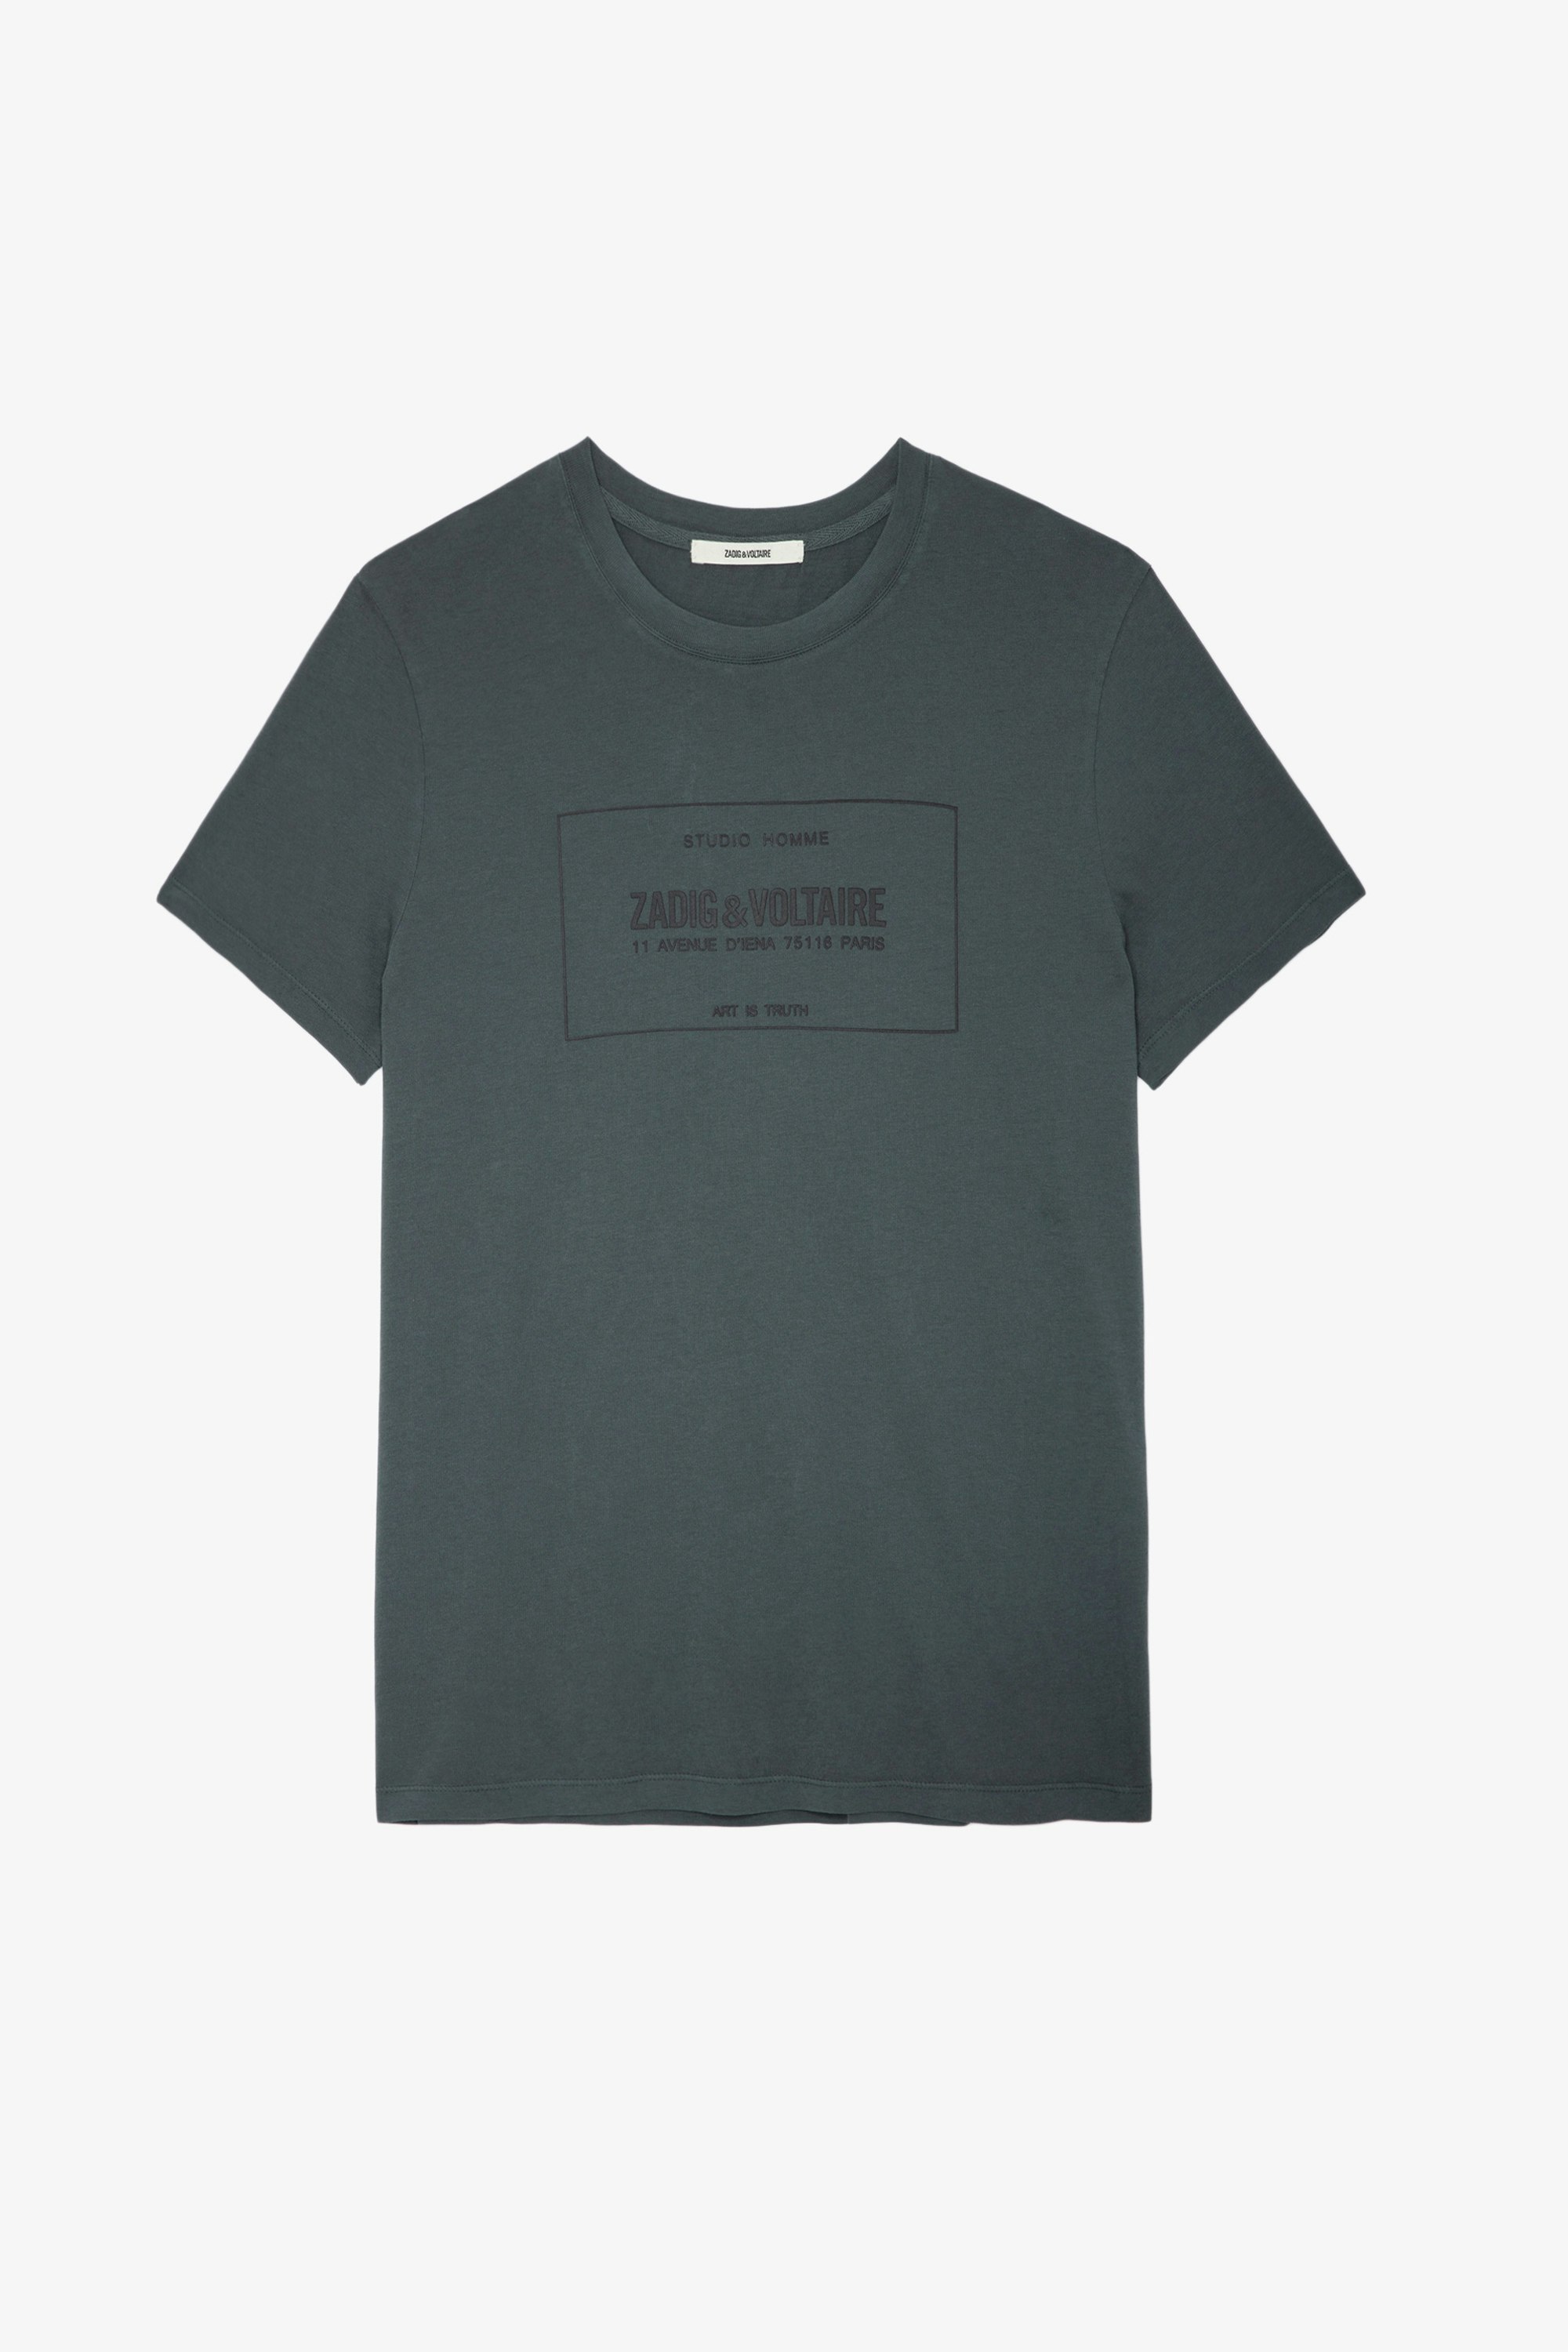 Ted T-Shirt - Men’s verdigris cotton T-shirt with studio insignia.